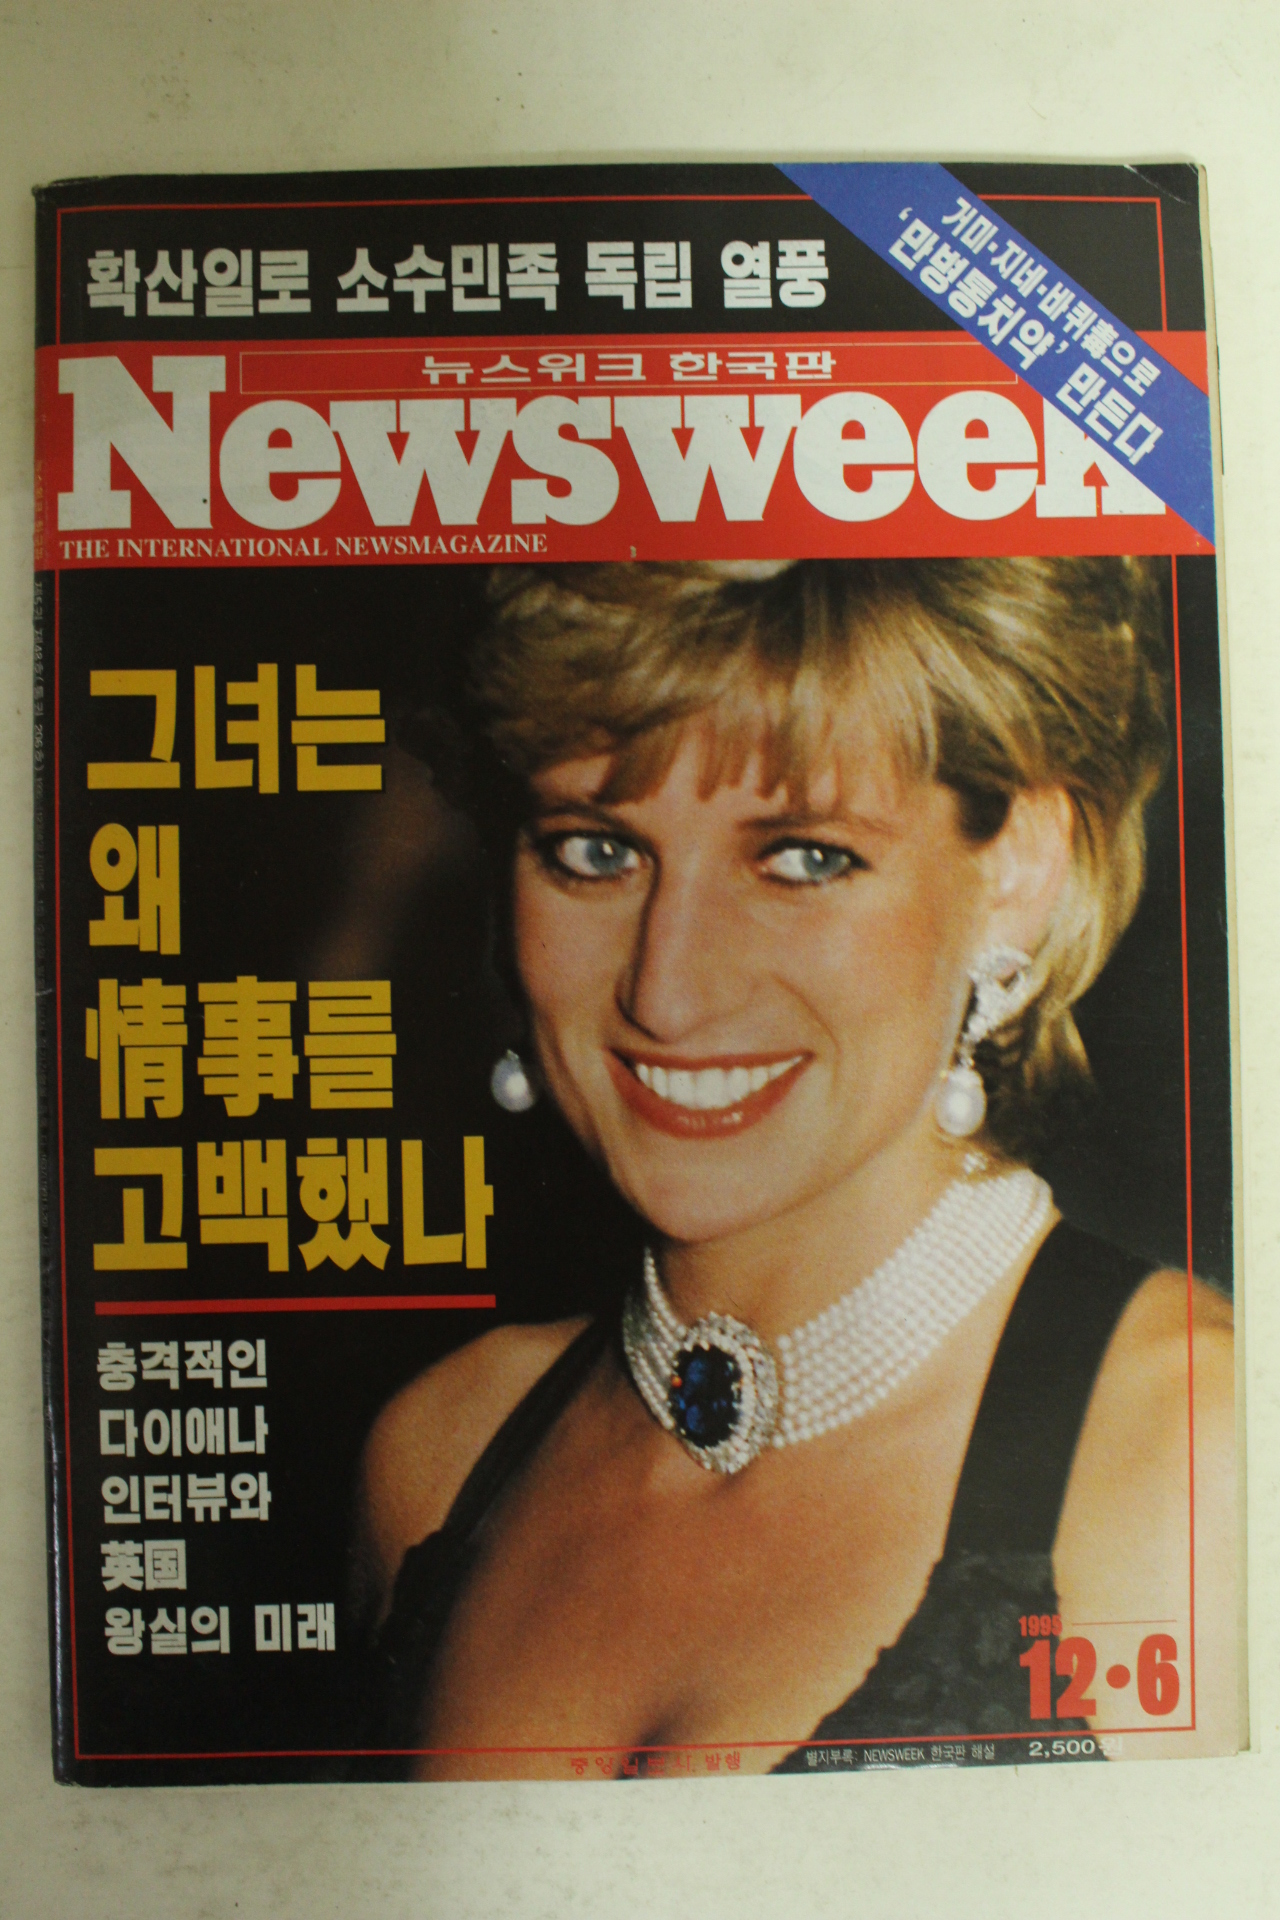 1995년 뉴스위크 12월6일자